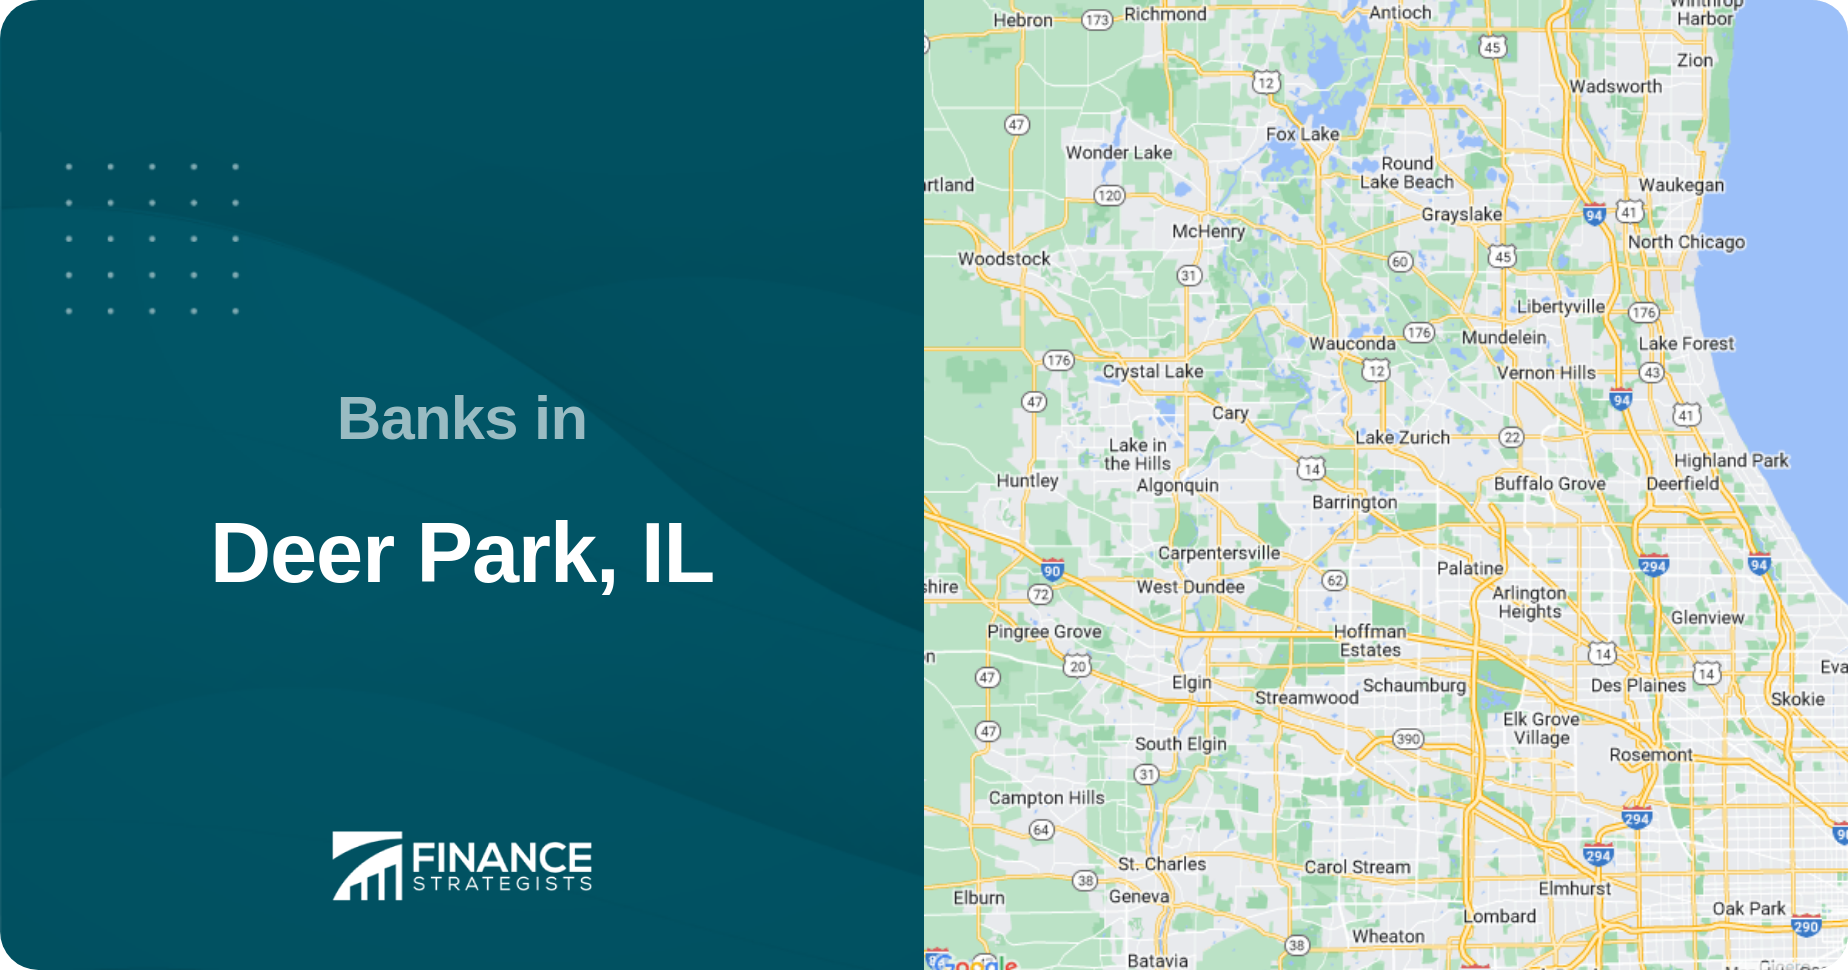 Banks in Deer Park, IL